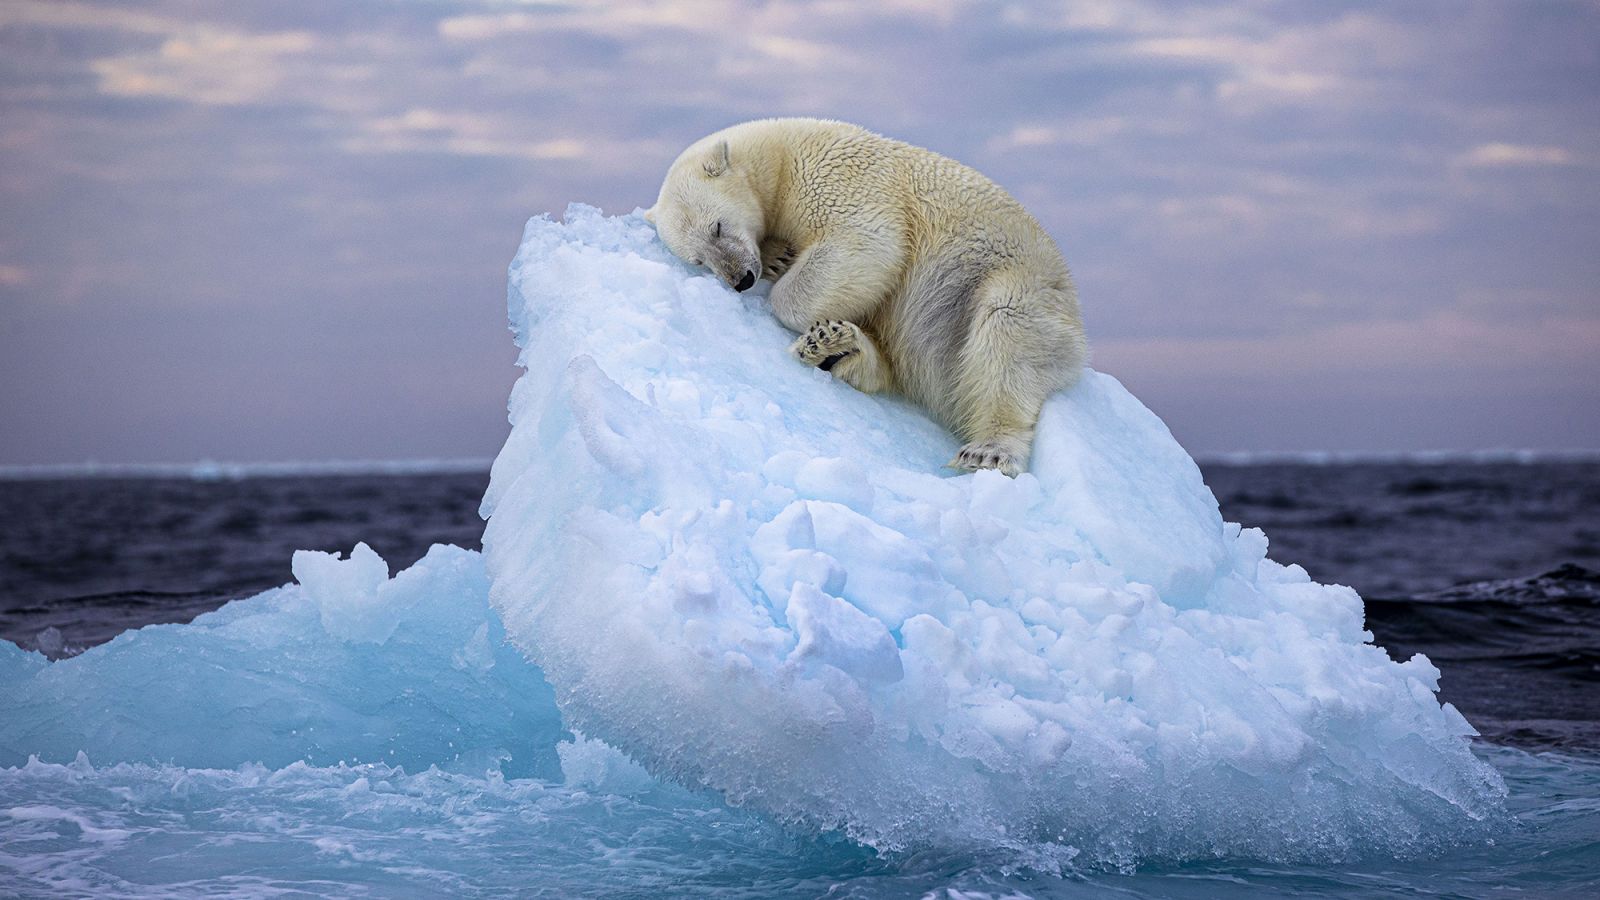 Image of sleeping polar bear wins top wildlife photography award